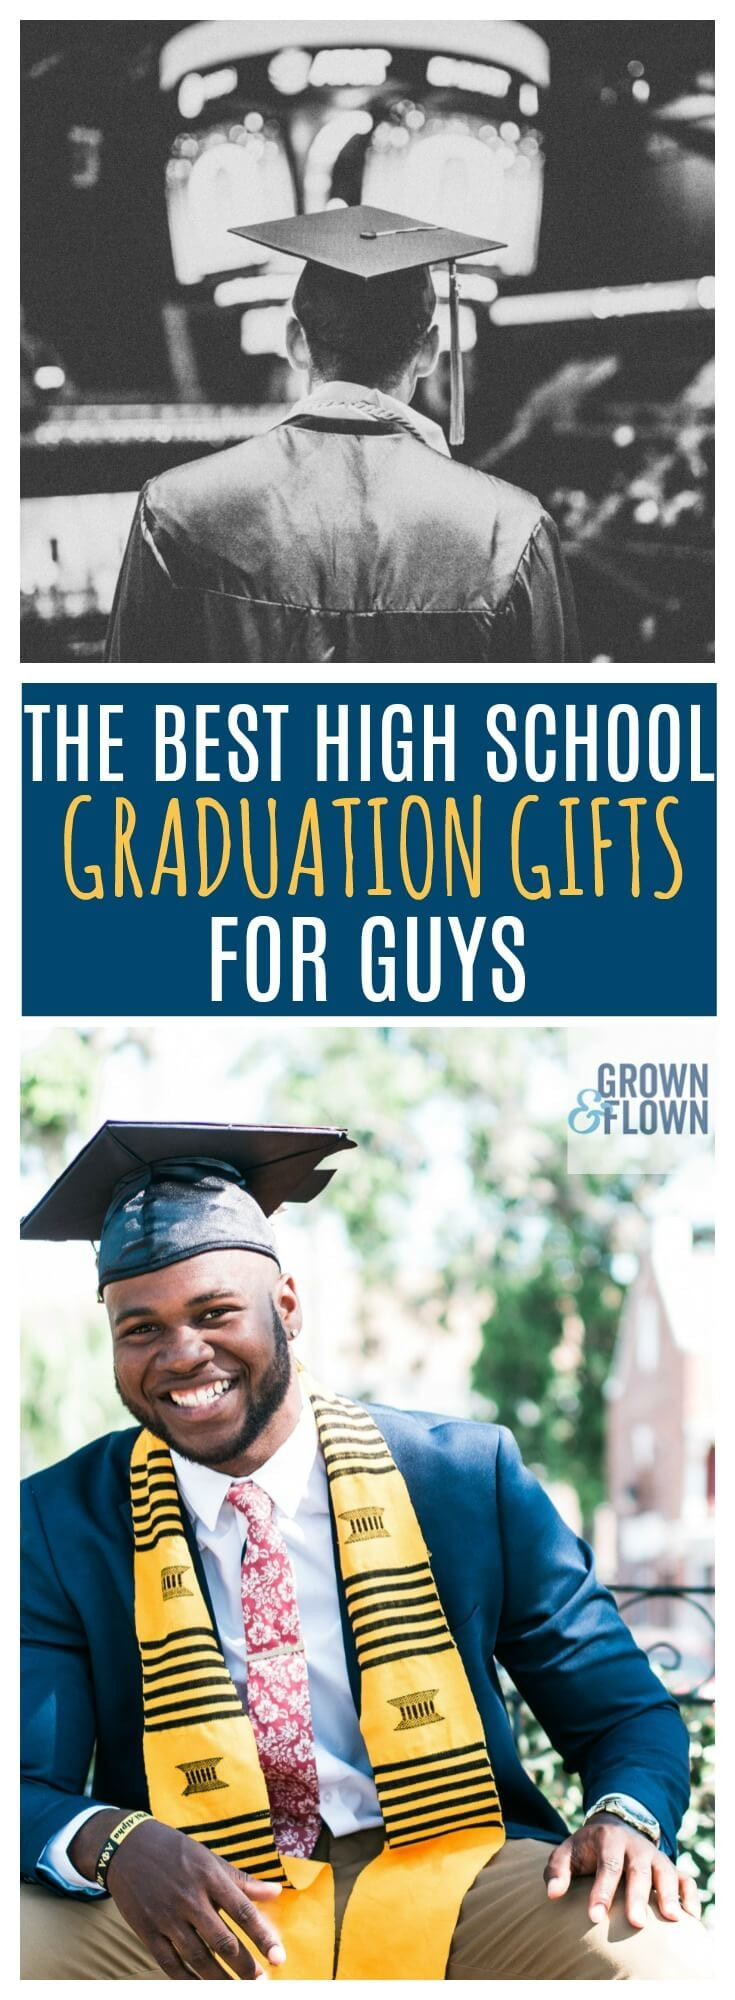 Graduation Gift Ideas For Guys
 2020 High School Graduation Gifts for Guys They Will Love